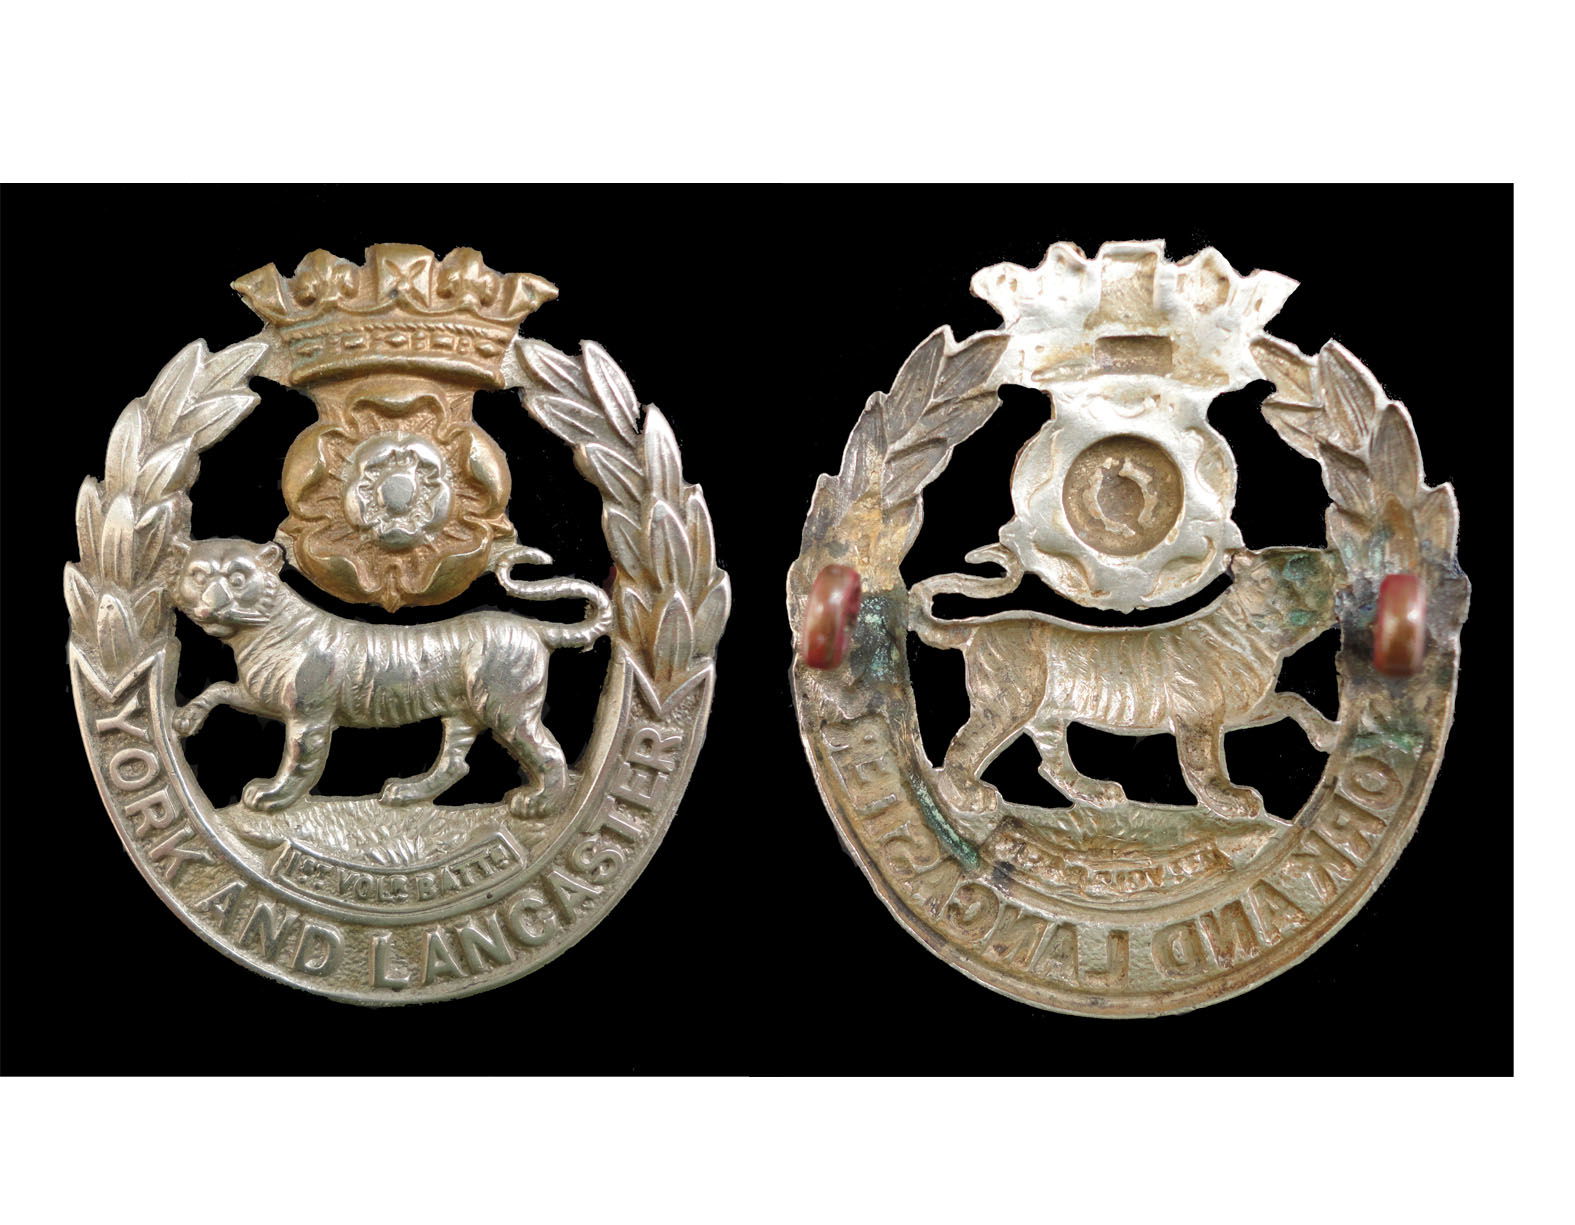 1st Volunteer (Hallamshire) Battalion Badge 1897 to 1908-3rd pattern